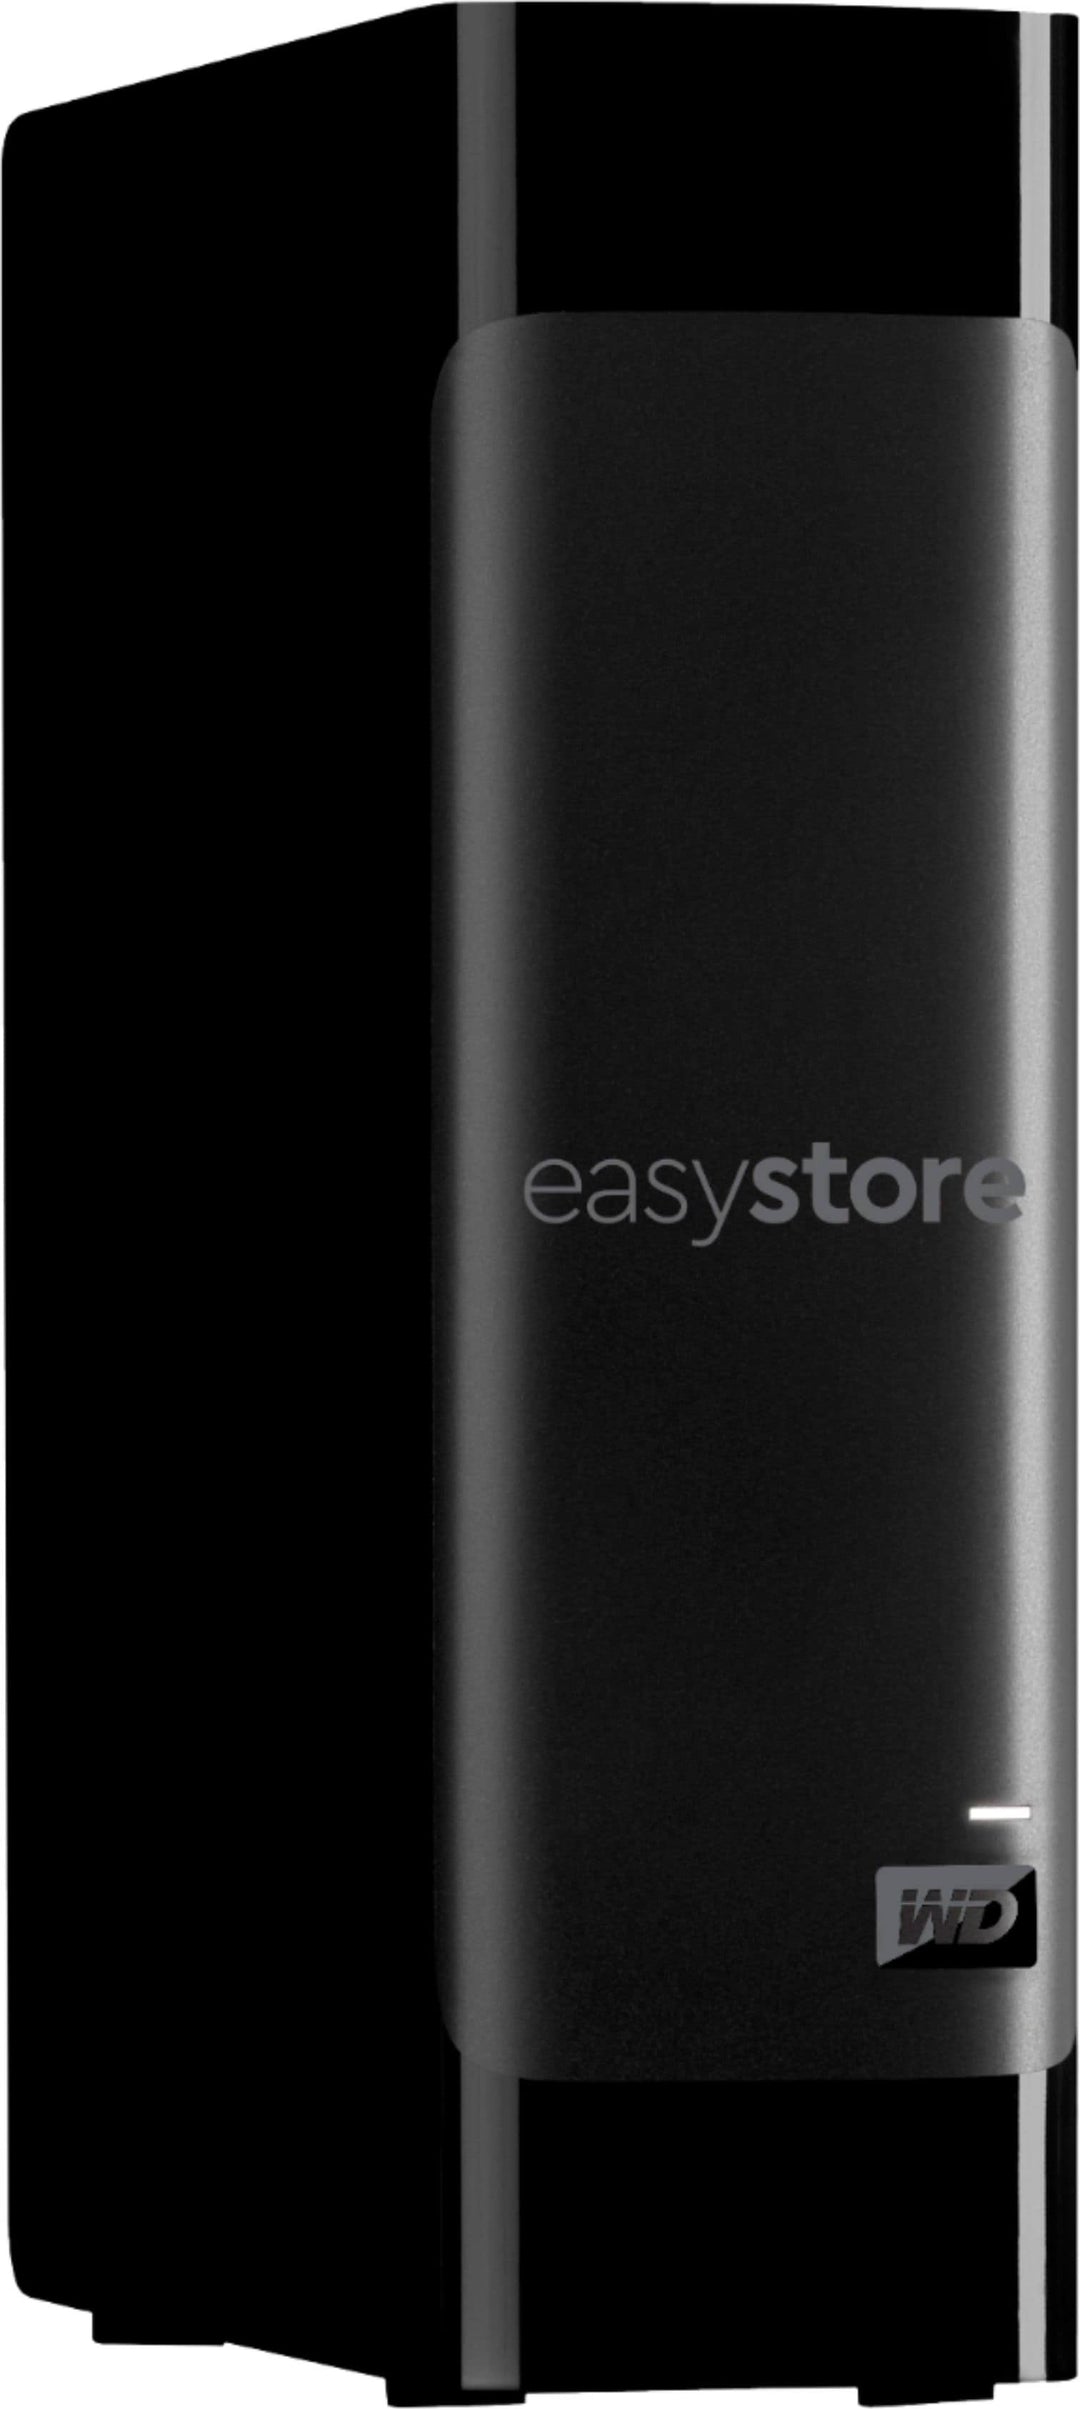 WD - easystore 14TB External USB 3.0 Hard Drive - Black_3